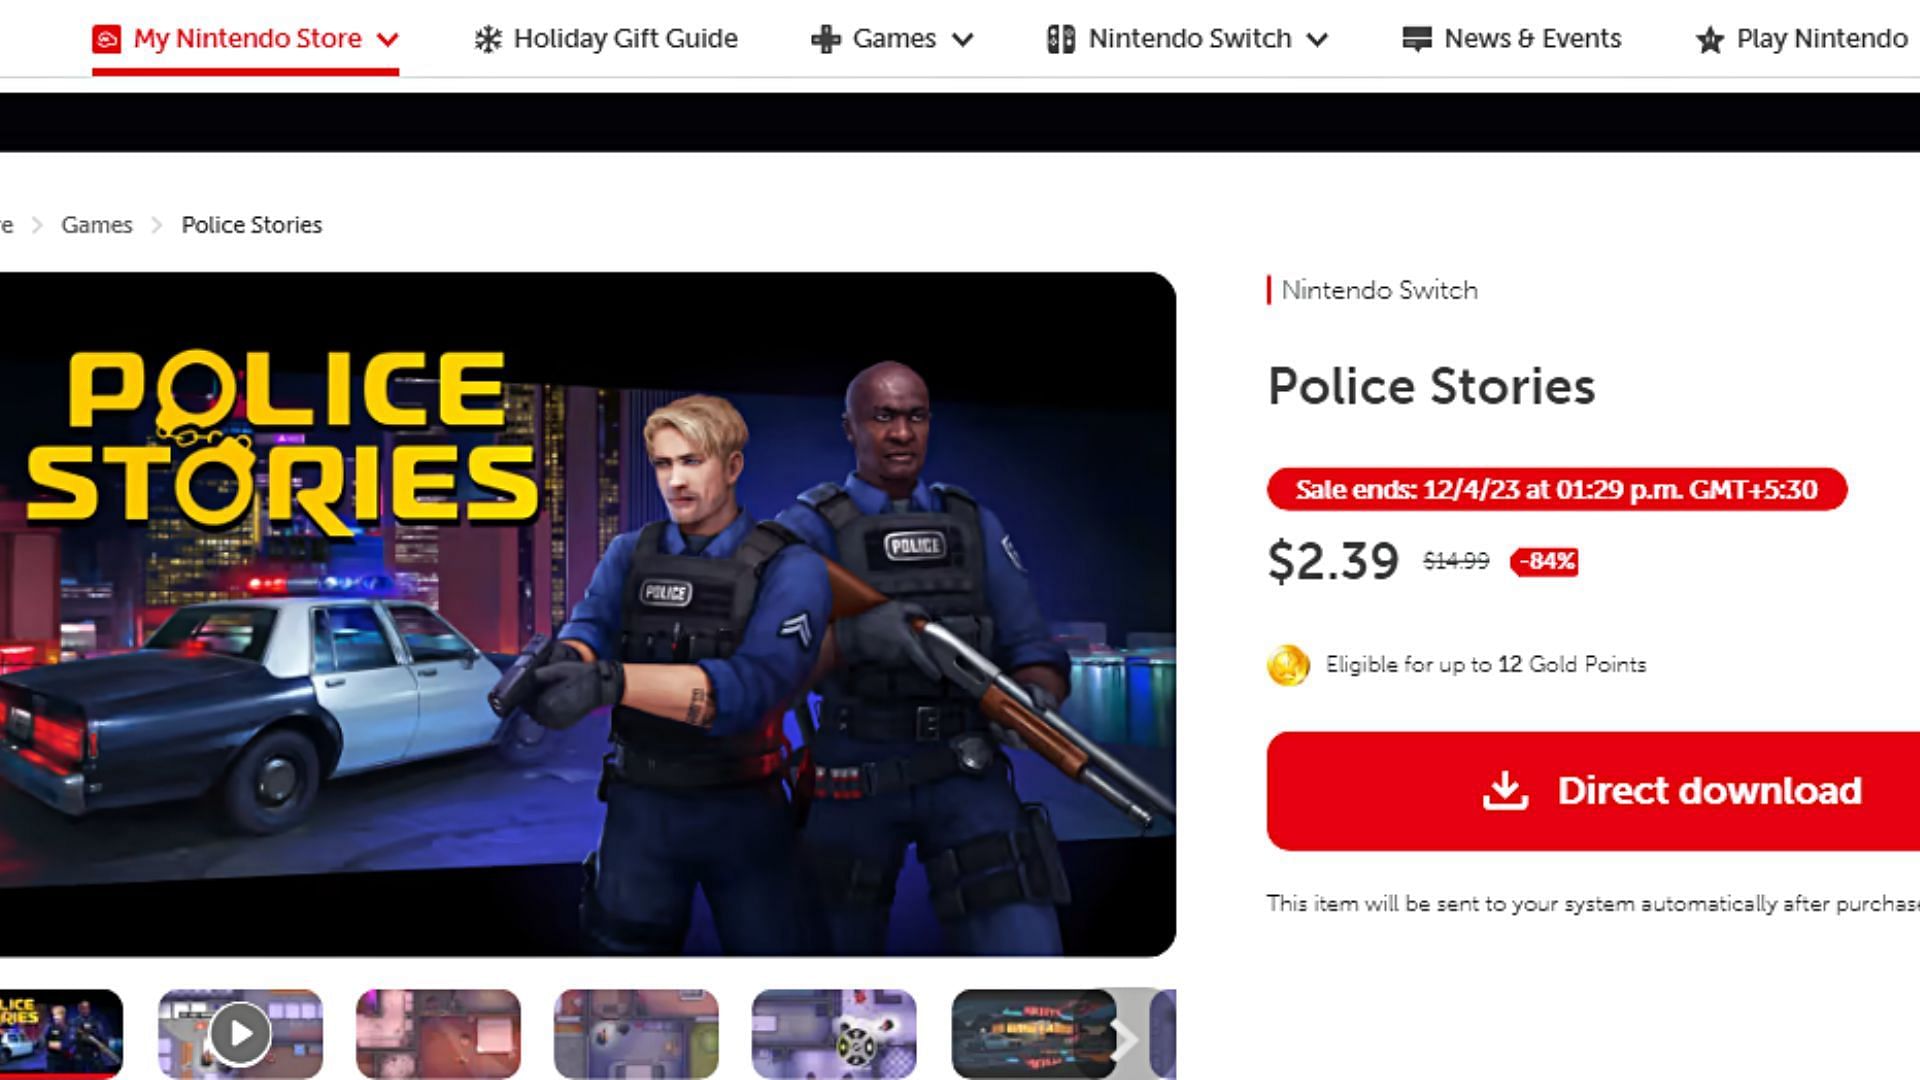 Police Stories&#039; page on the Nintendo Store (Image via nintendo.com)